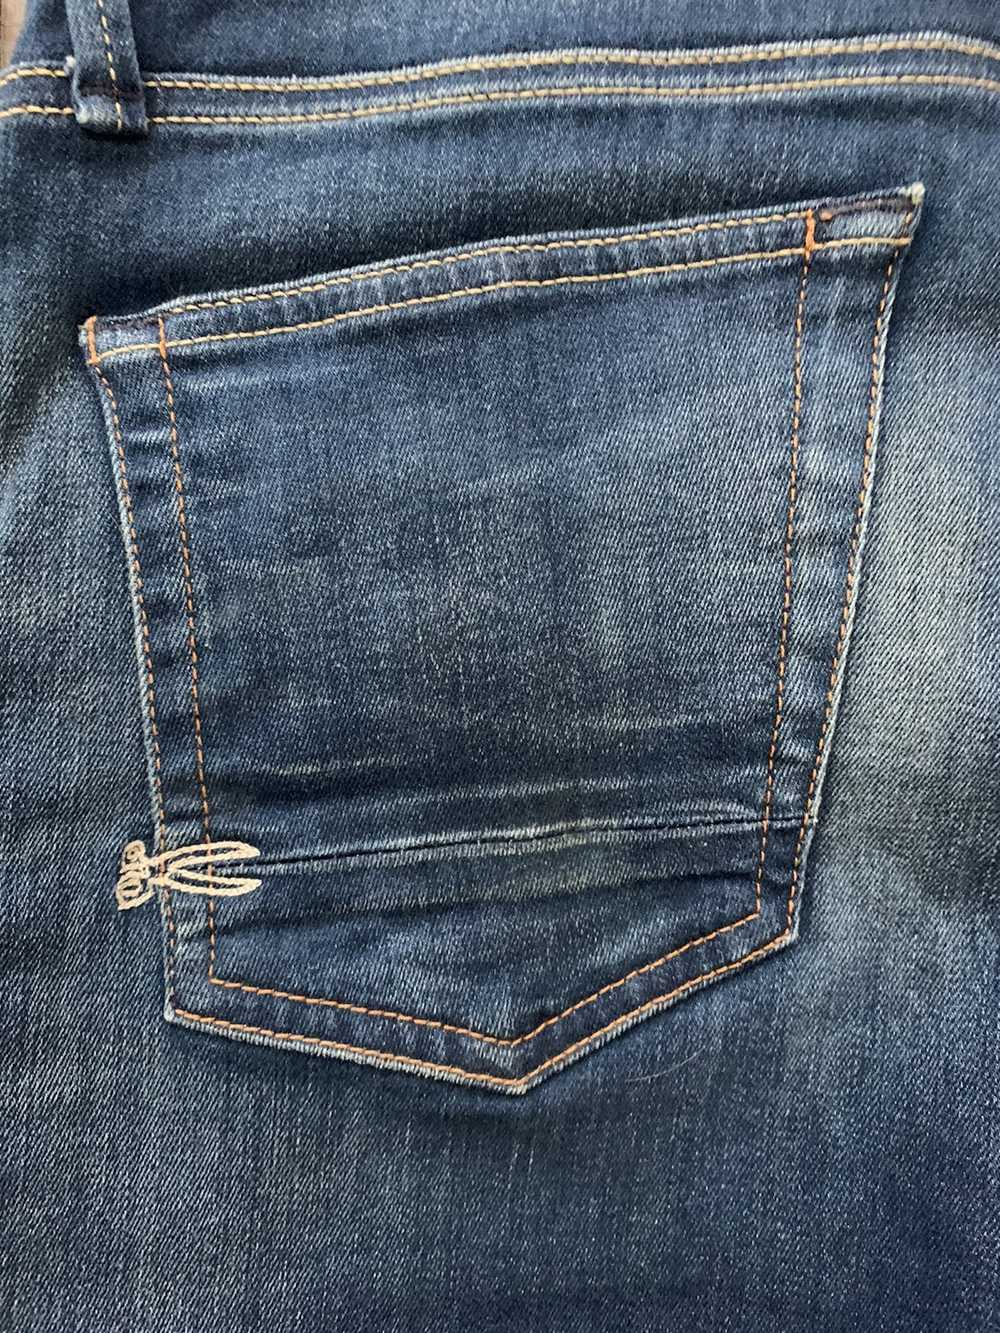 Denham Denham Razor Slim Fit Jeans - image 3